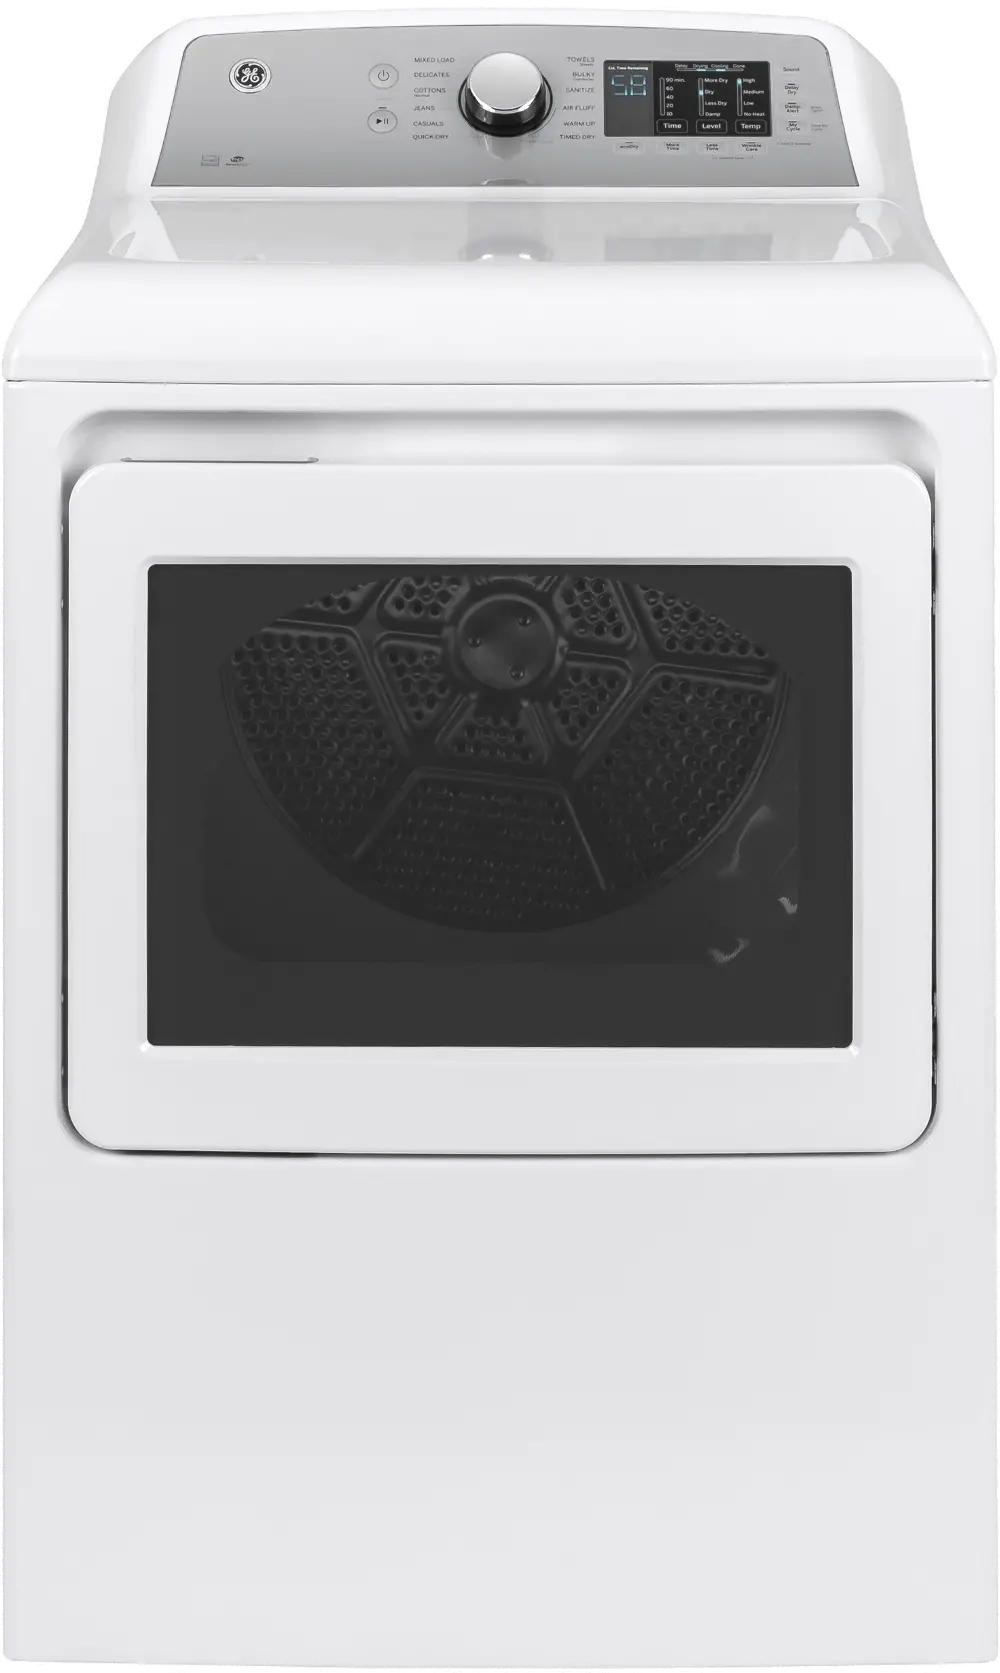 GTD72GBSNWS GE Gas Dryer with HE Sensor Dry - White, 7.4 cu. ft.-1